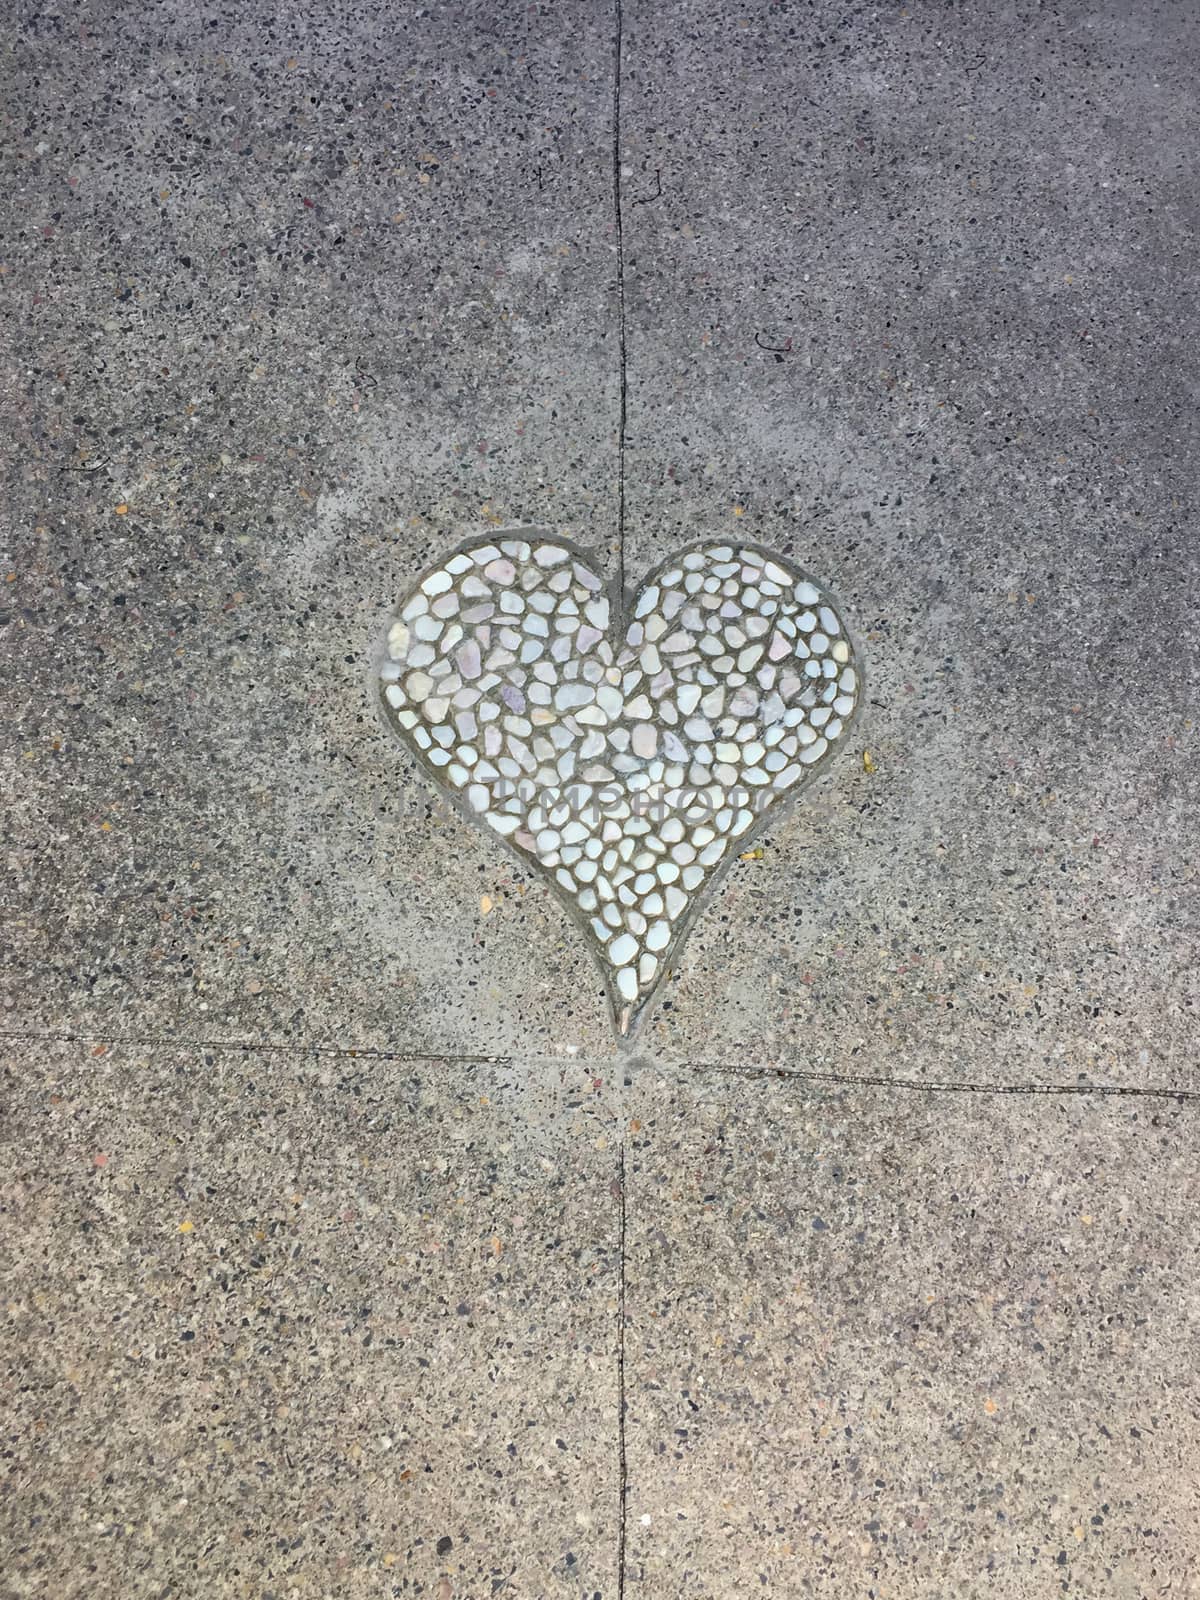 Heart fixation made with stones by leo_de_la_garza